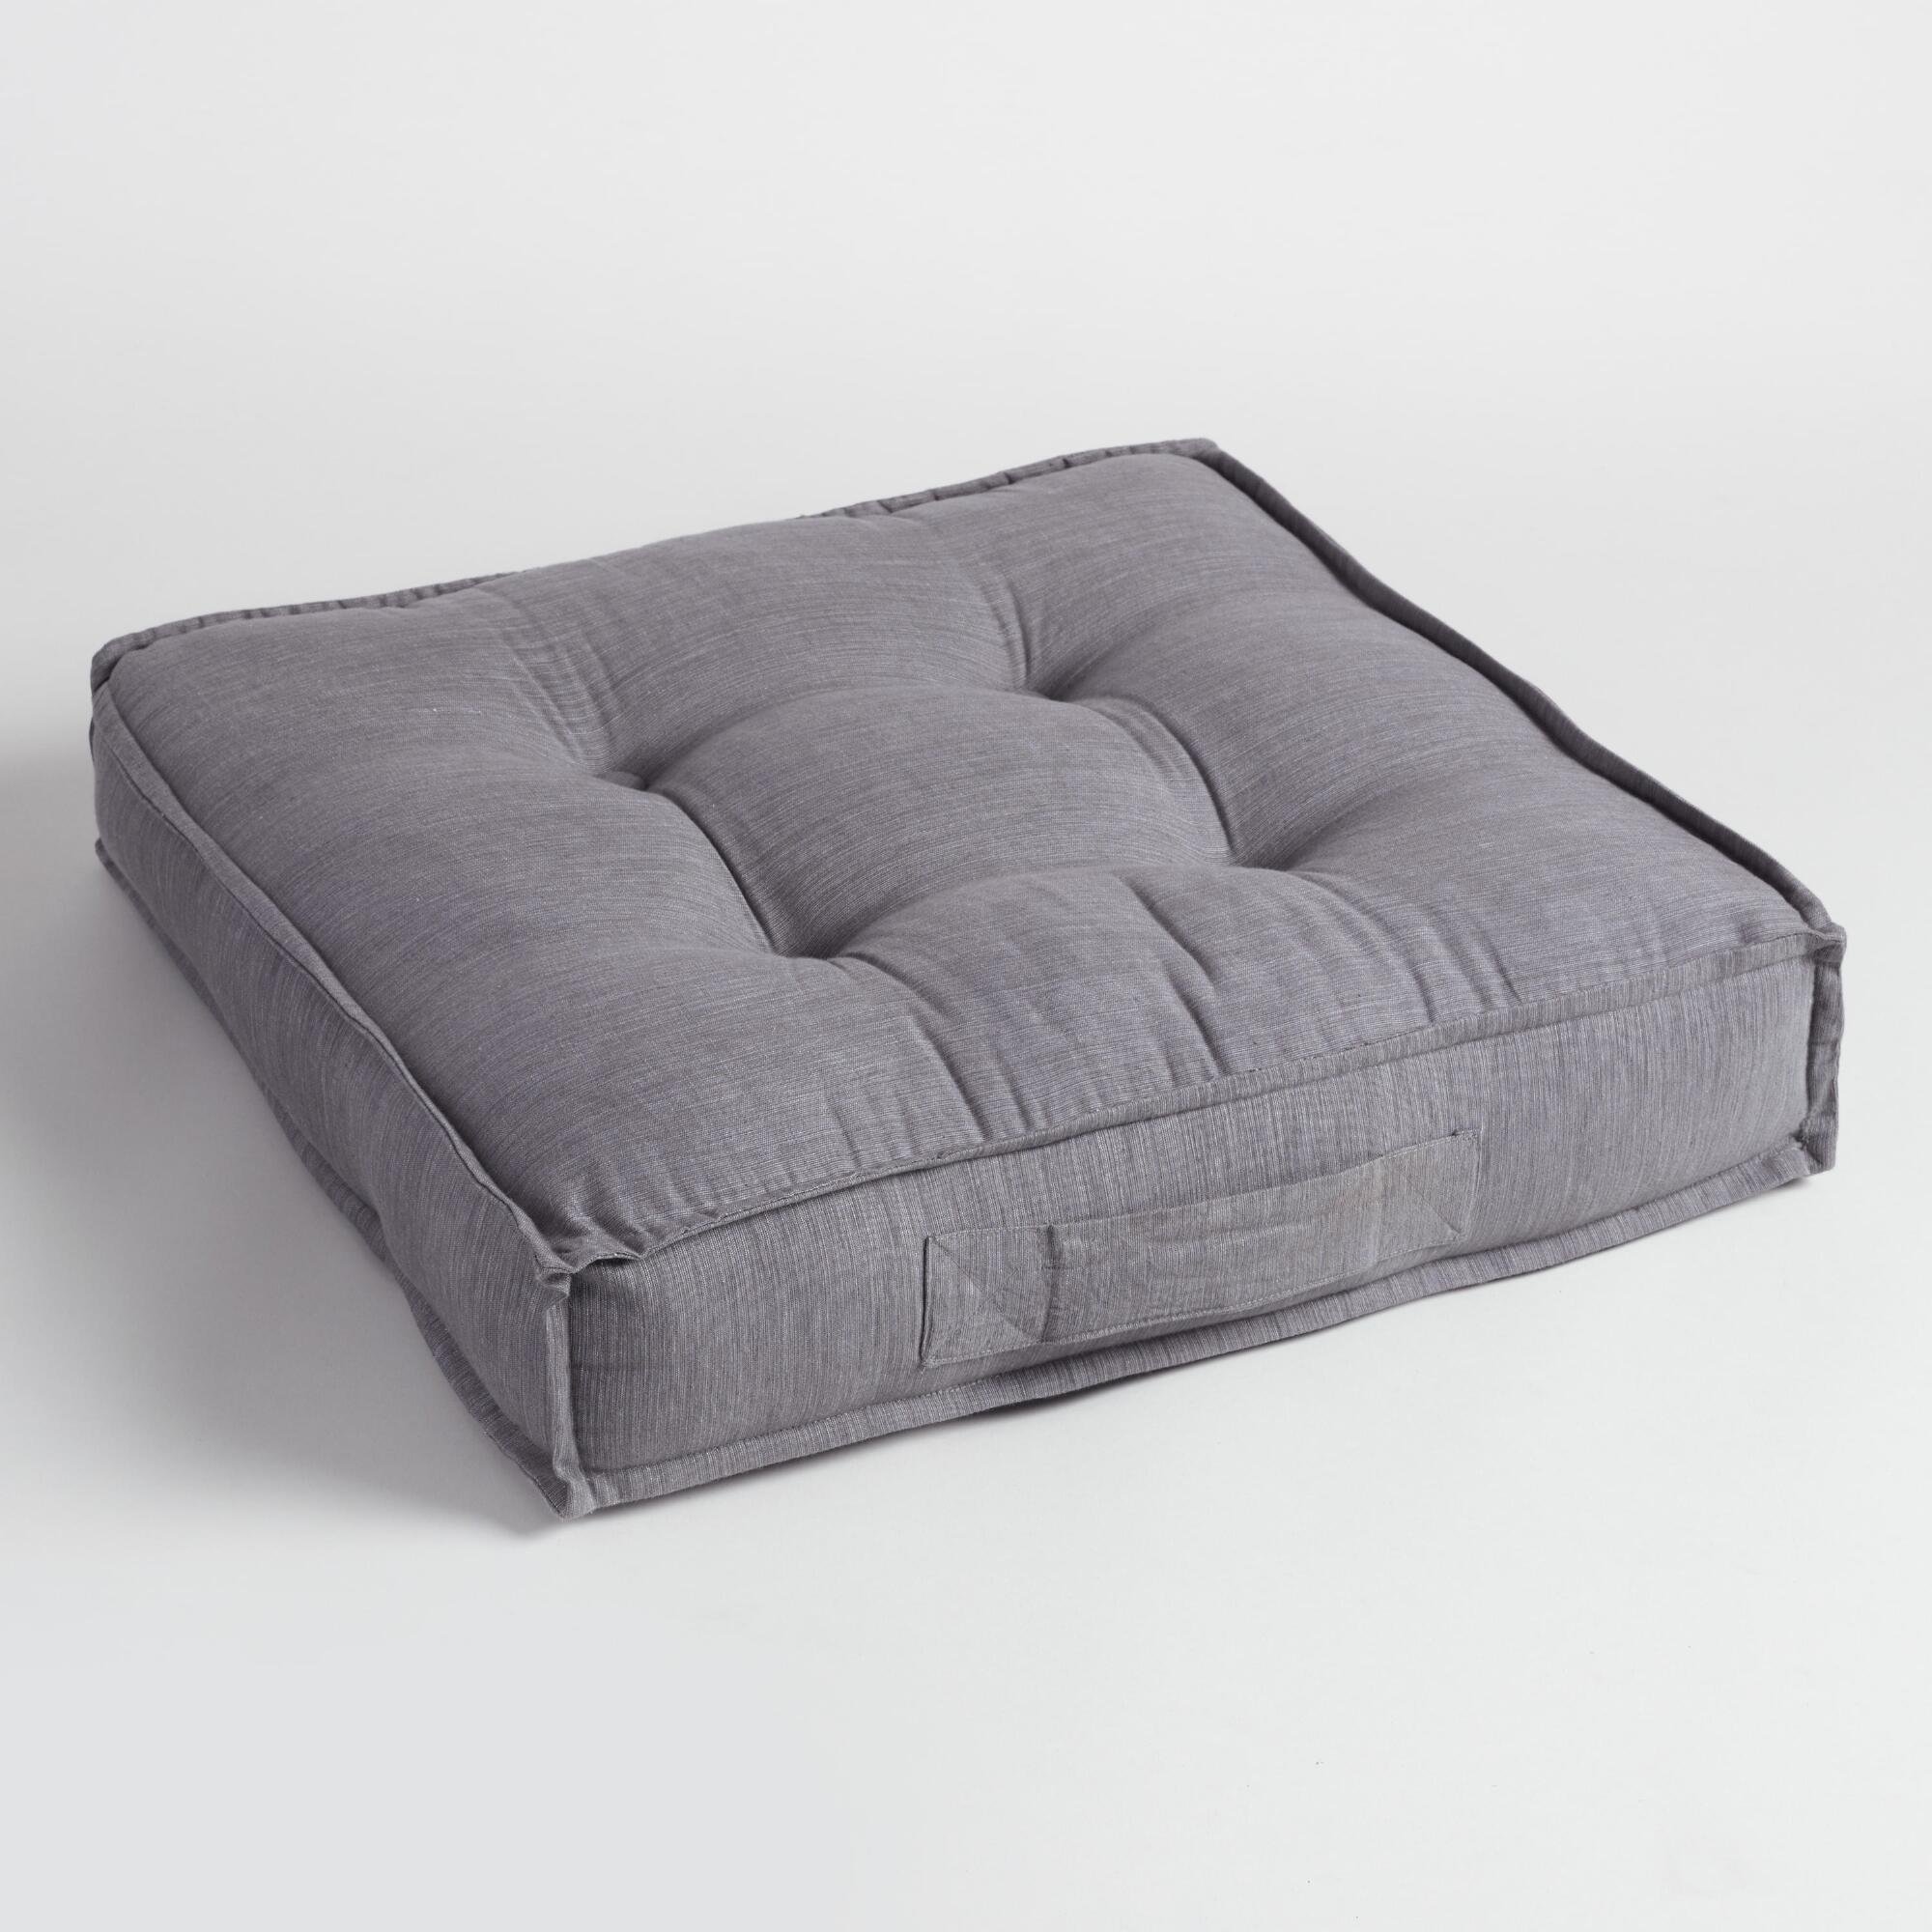 формованные подушки для дивана